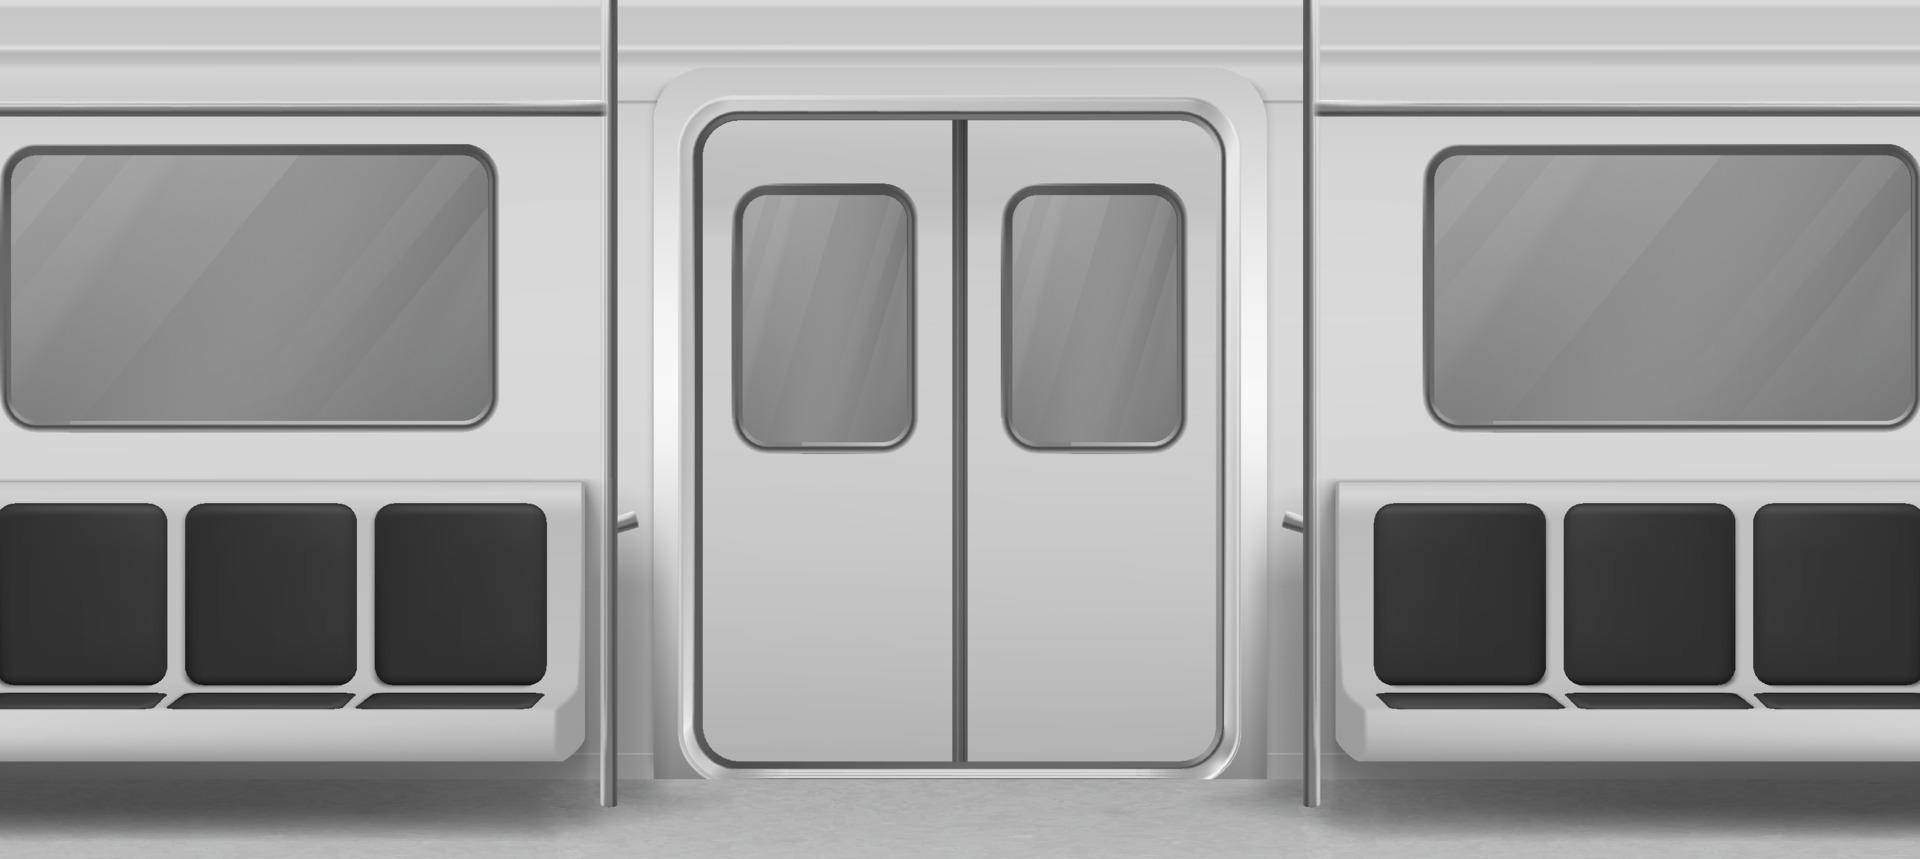 Subway wagon interior inside view with door, seats vector